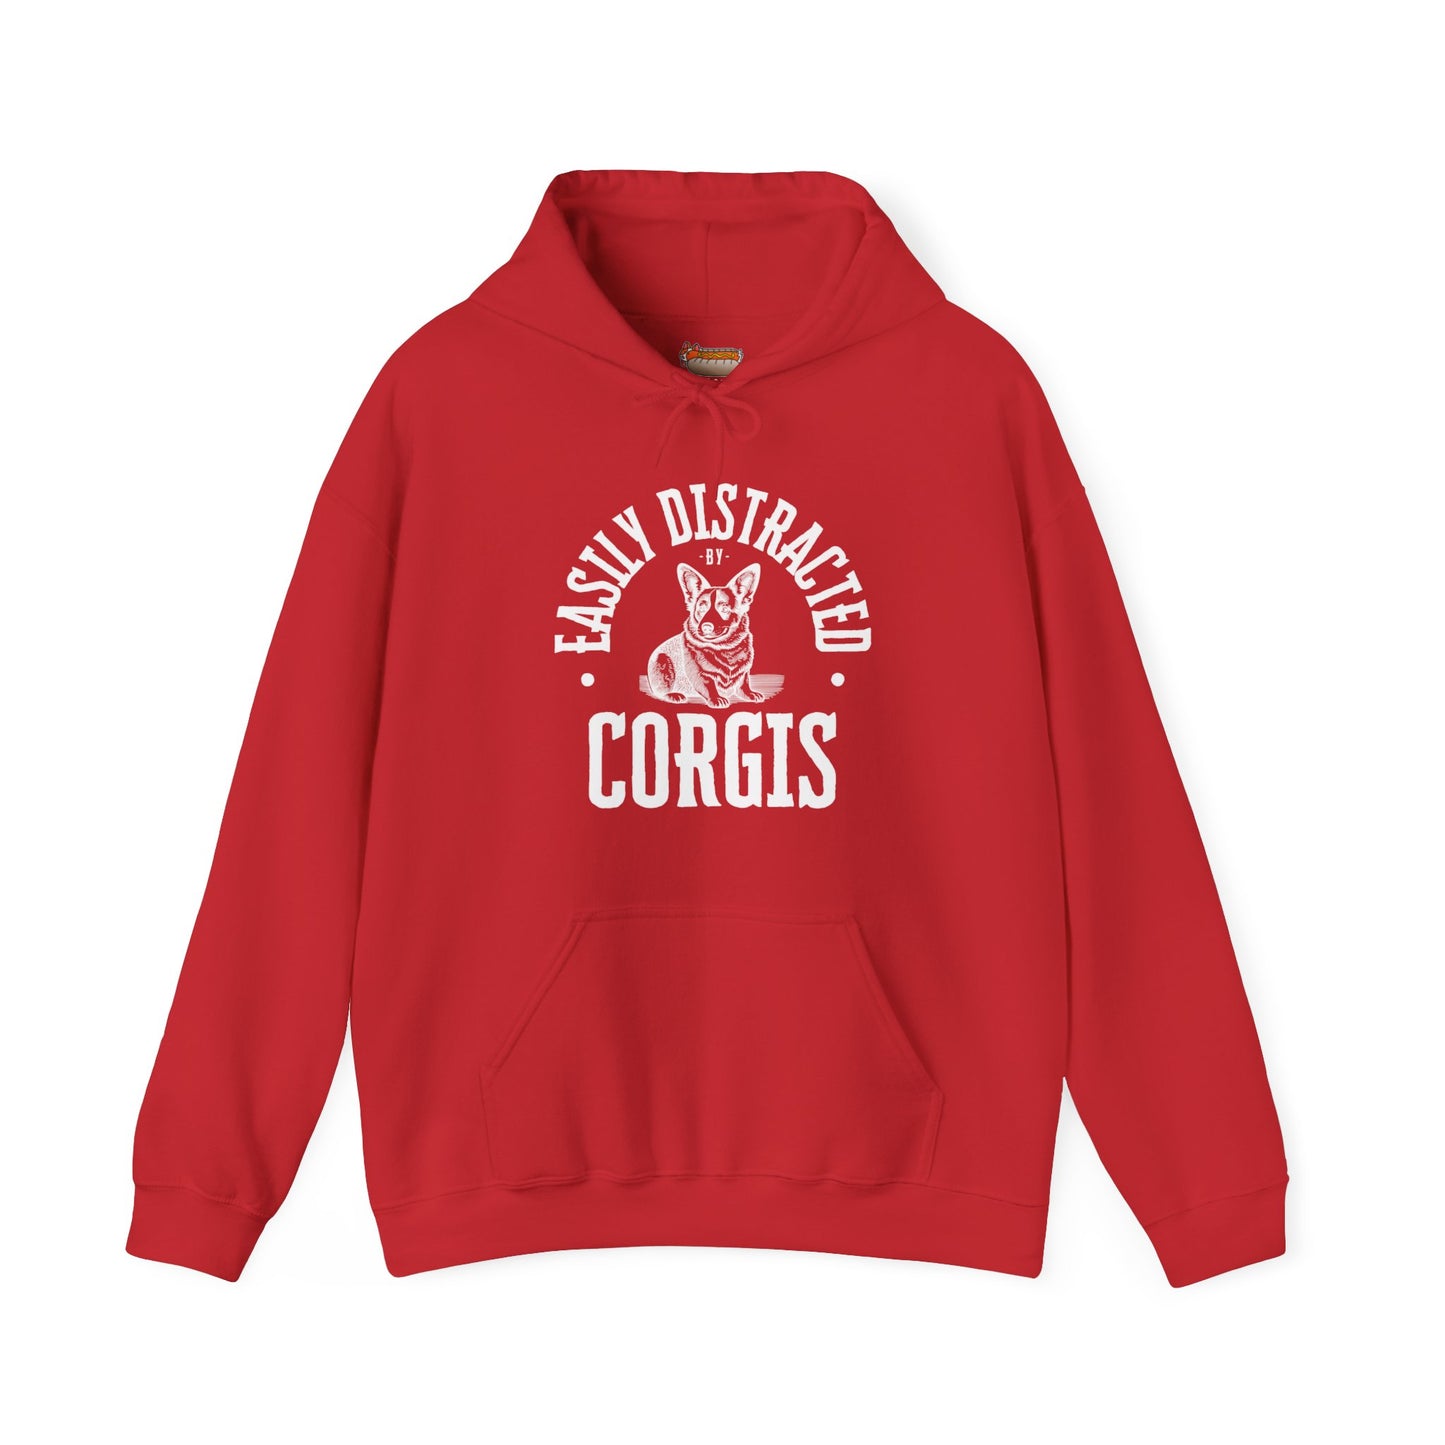 red crimson corgi hoodie easily distracted women men sweatshirt shirt